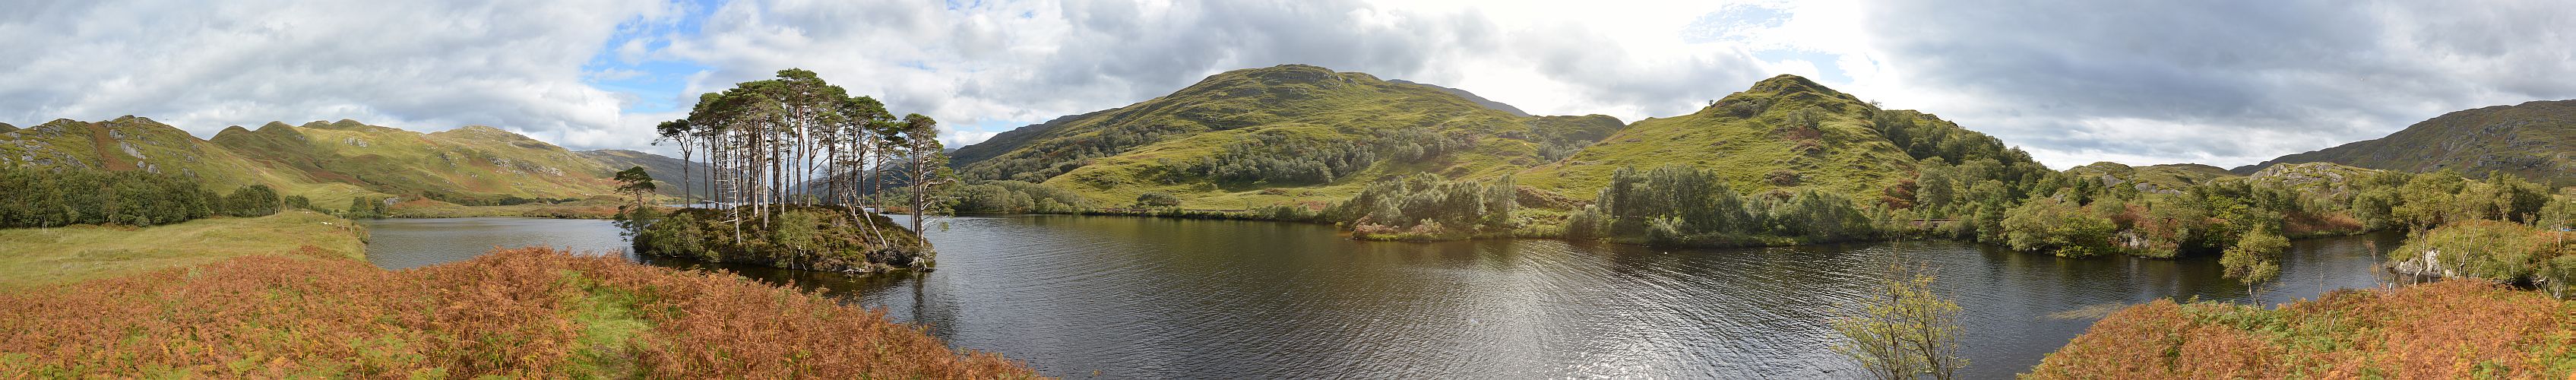 Loch Eilt Panorama Harry Potter Drehort Filmlocation Scotland